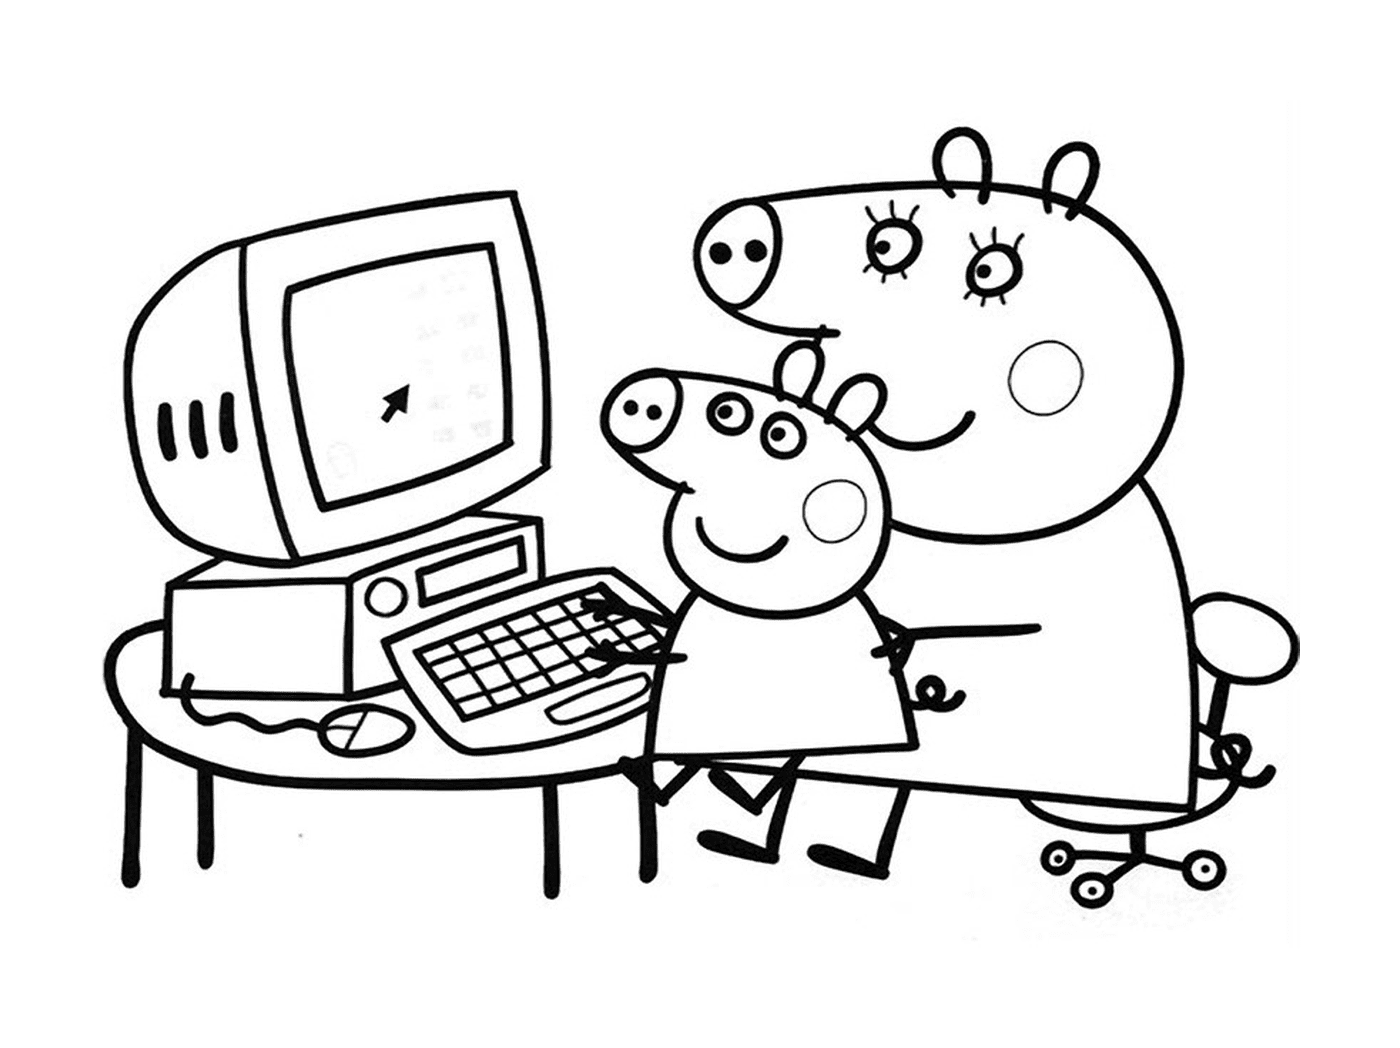   Peppa Pig et George Pig à l'ordinateur 